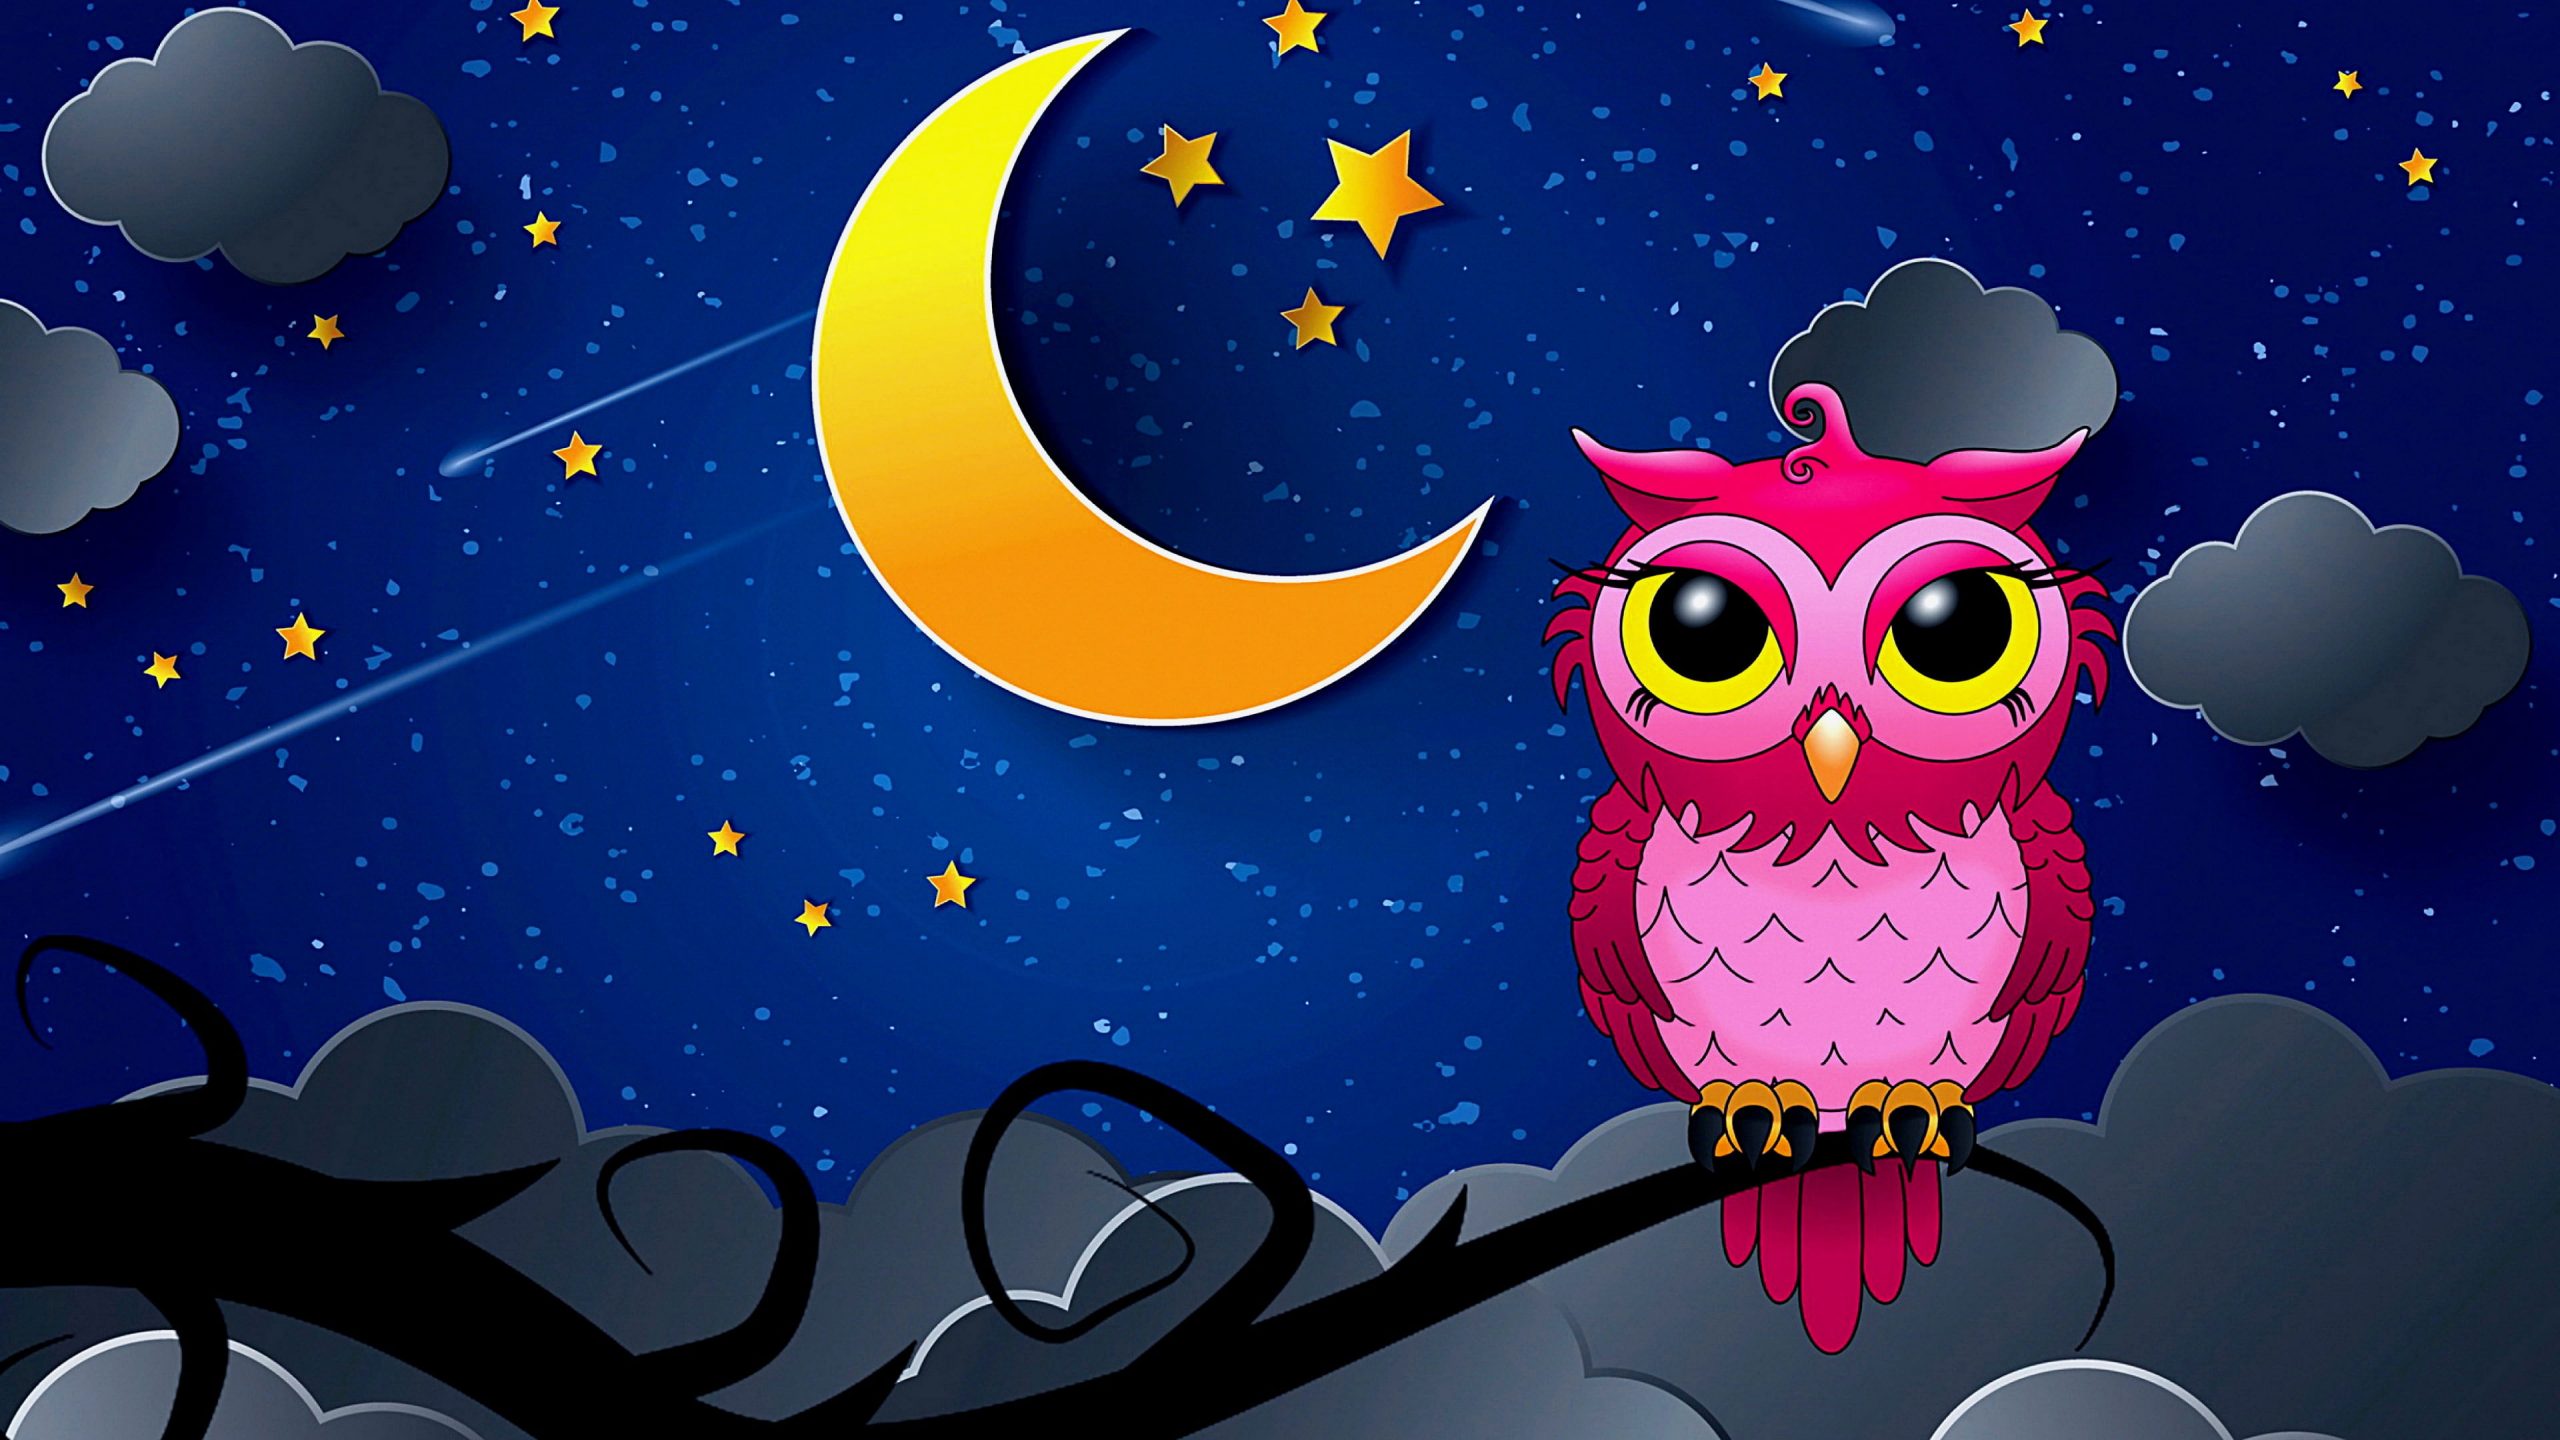 Wallpaper Cartoon, Owl, Blue, Good Night, Pink